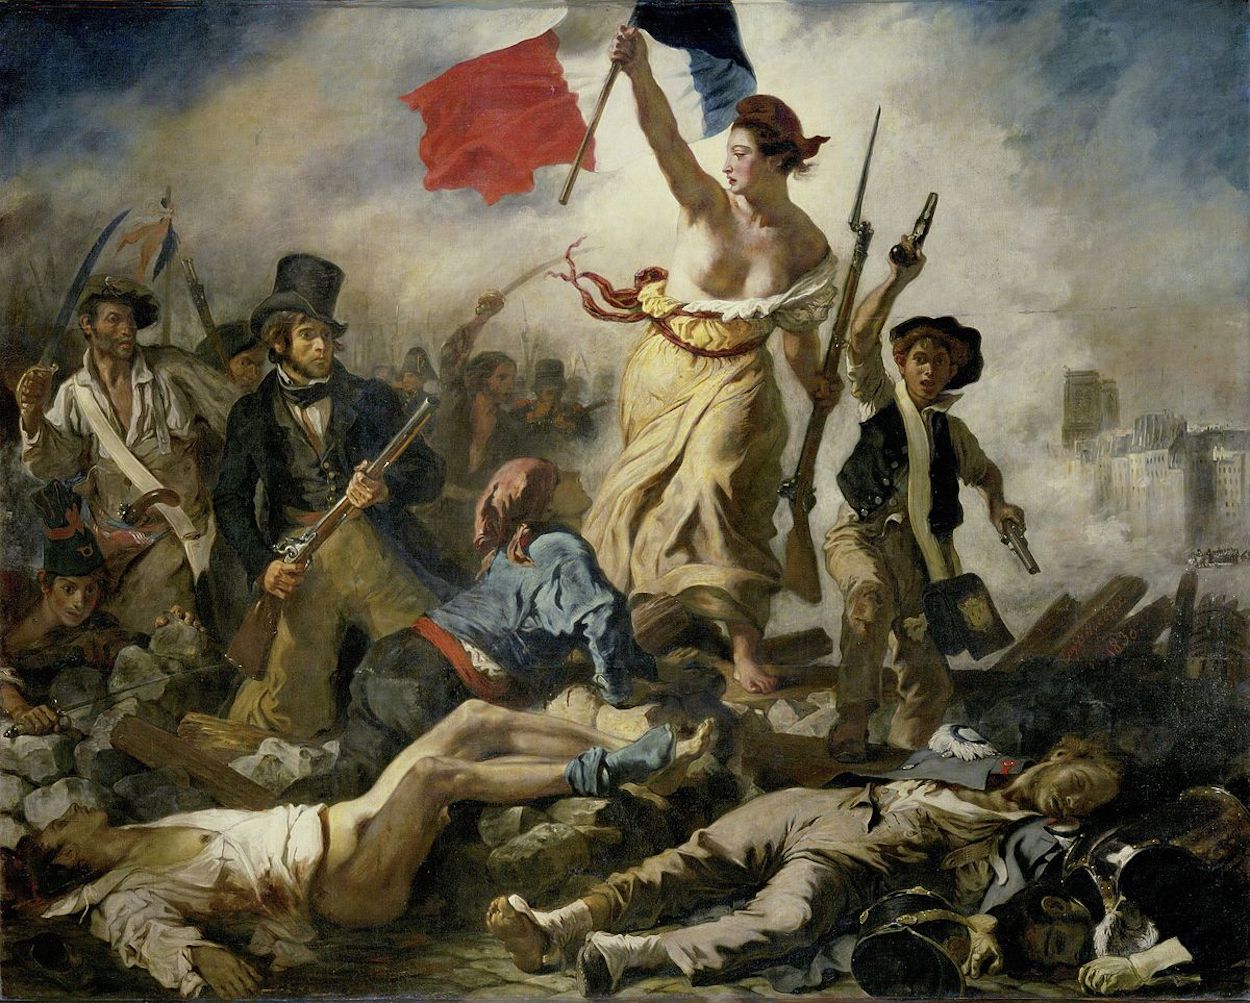 La Libertà che guida il popolo by Eugène Delacroix - 1830 - 260 cm x 325 cm Musée du Louvre